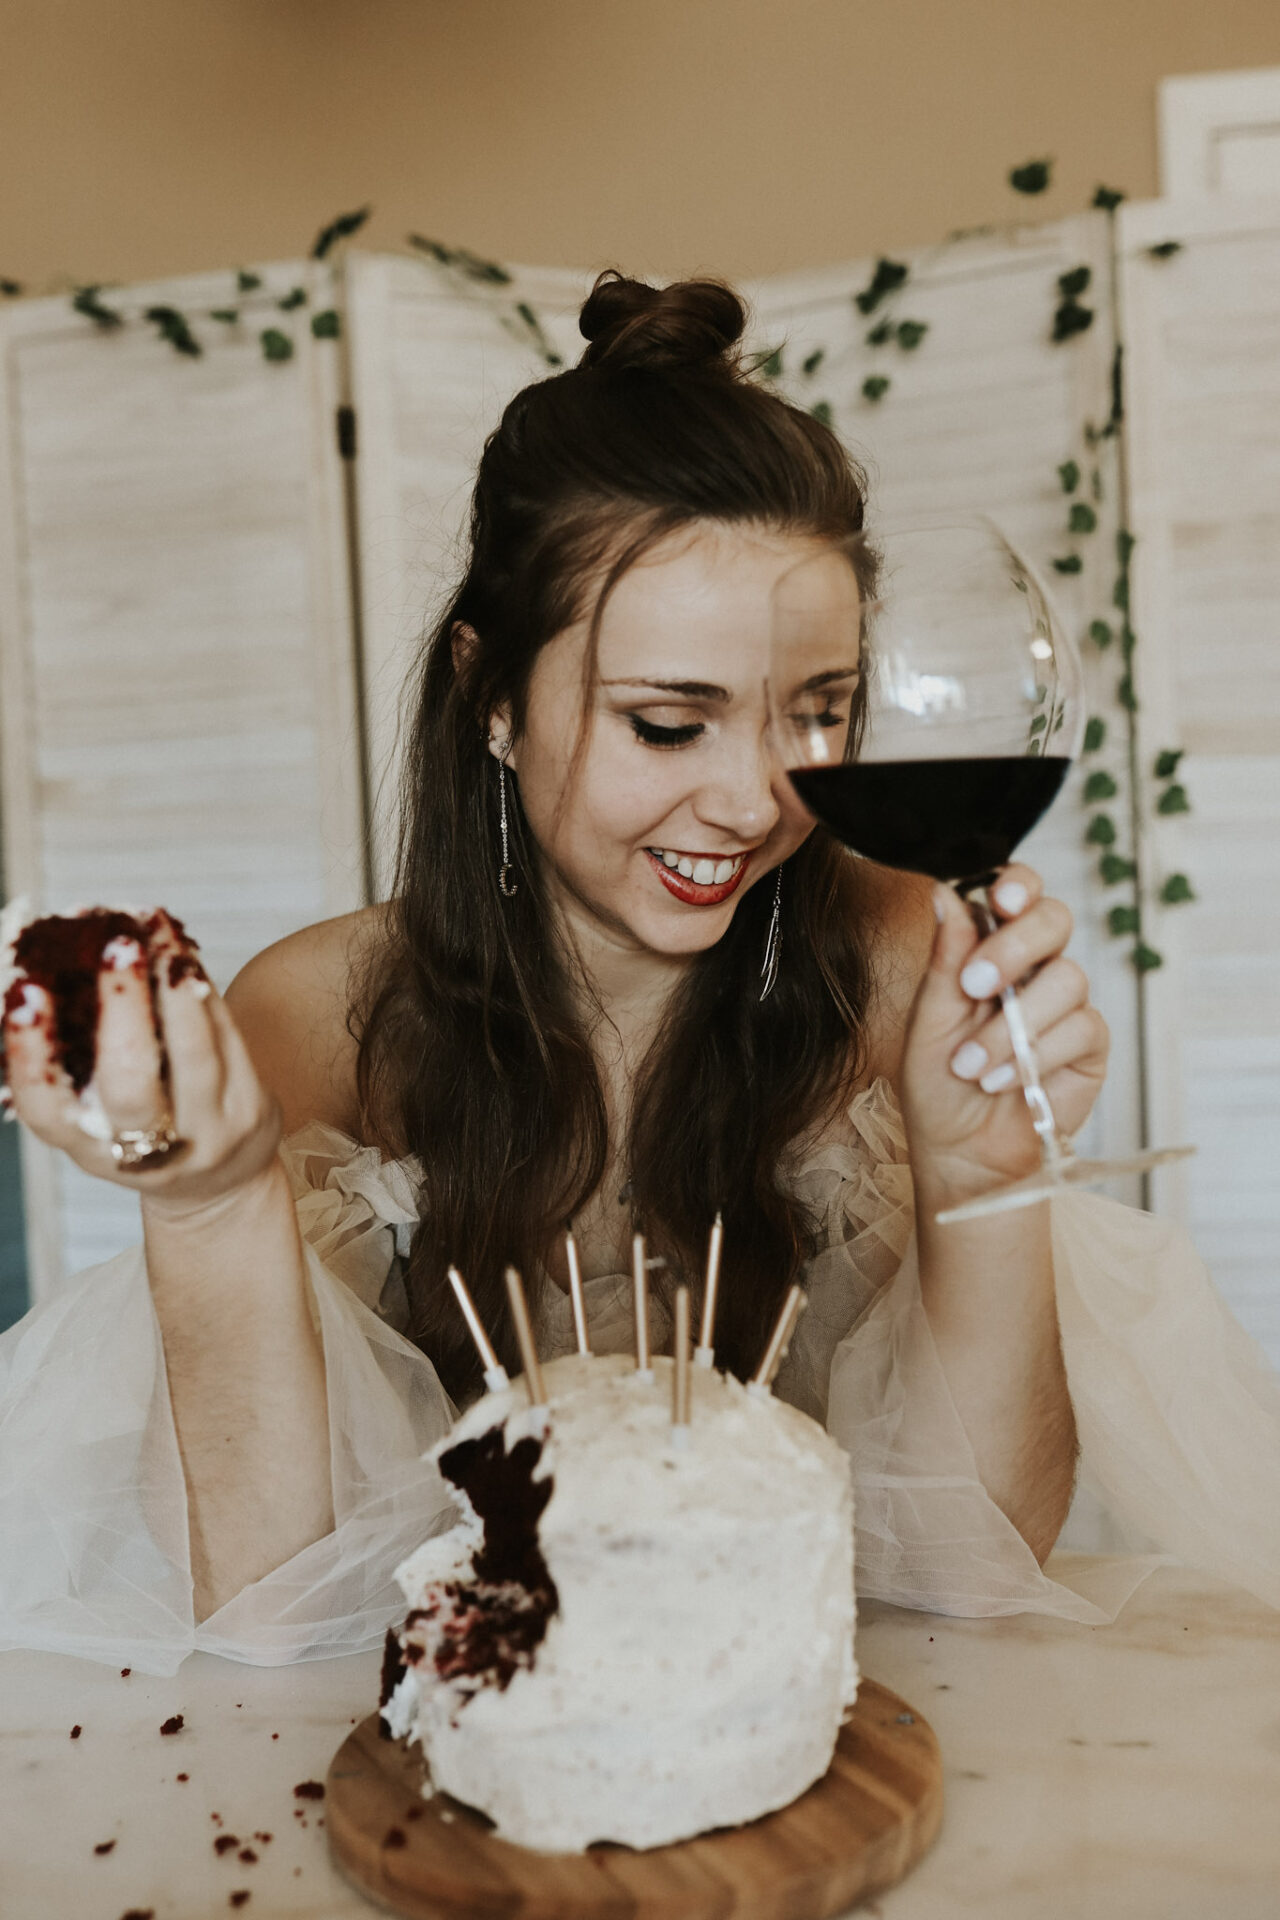 Paige with chocolate wine and cake birthday